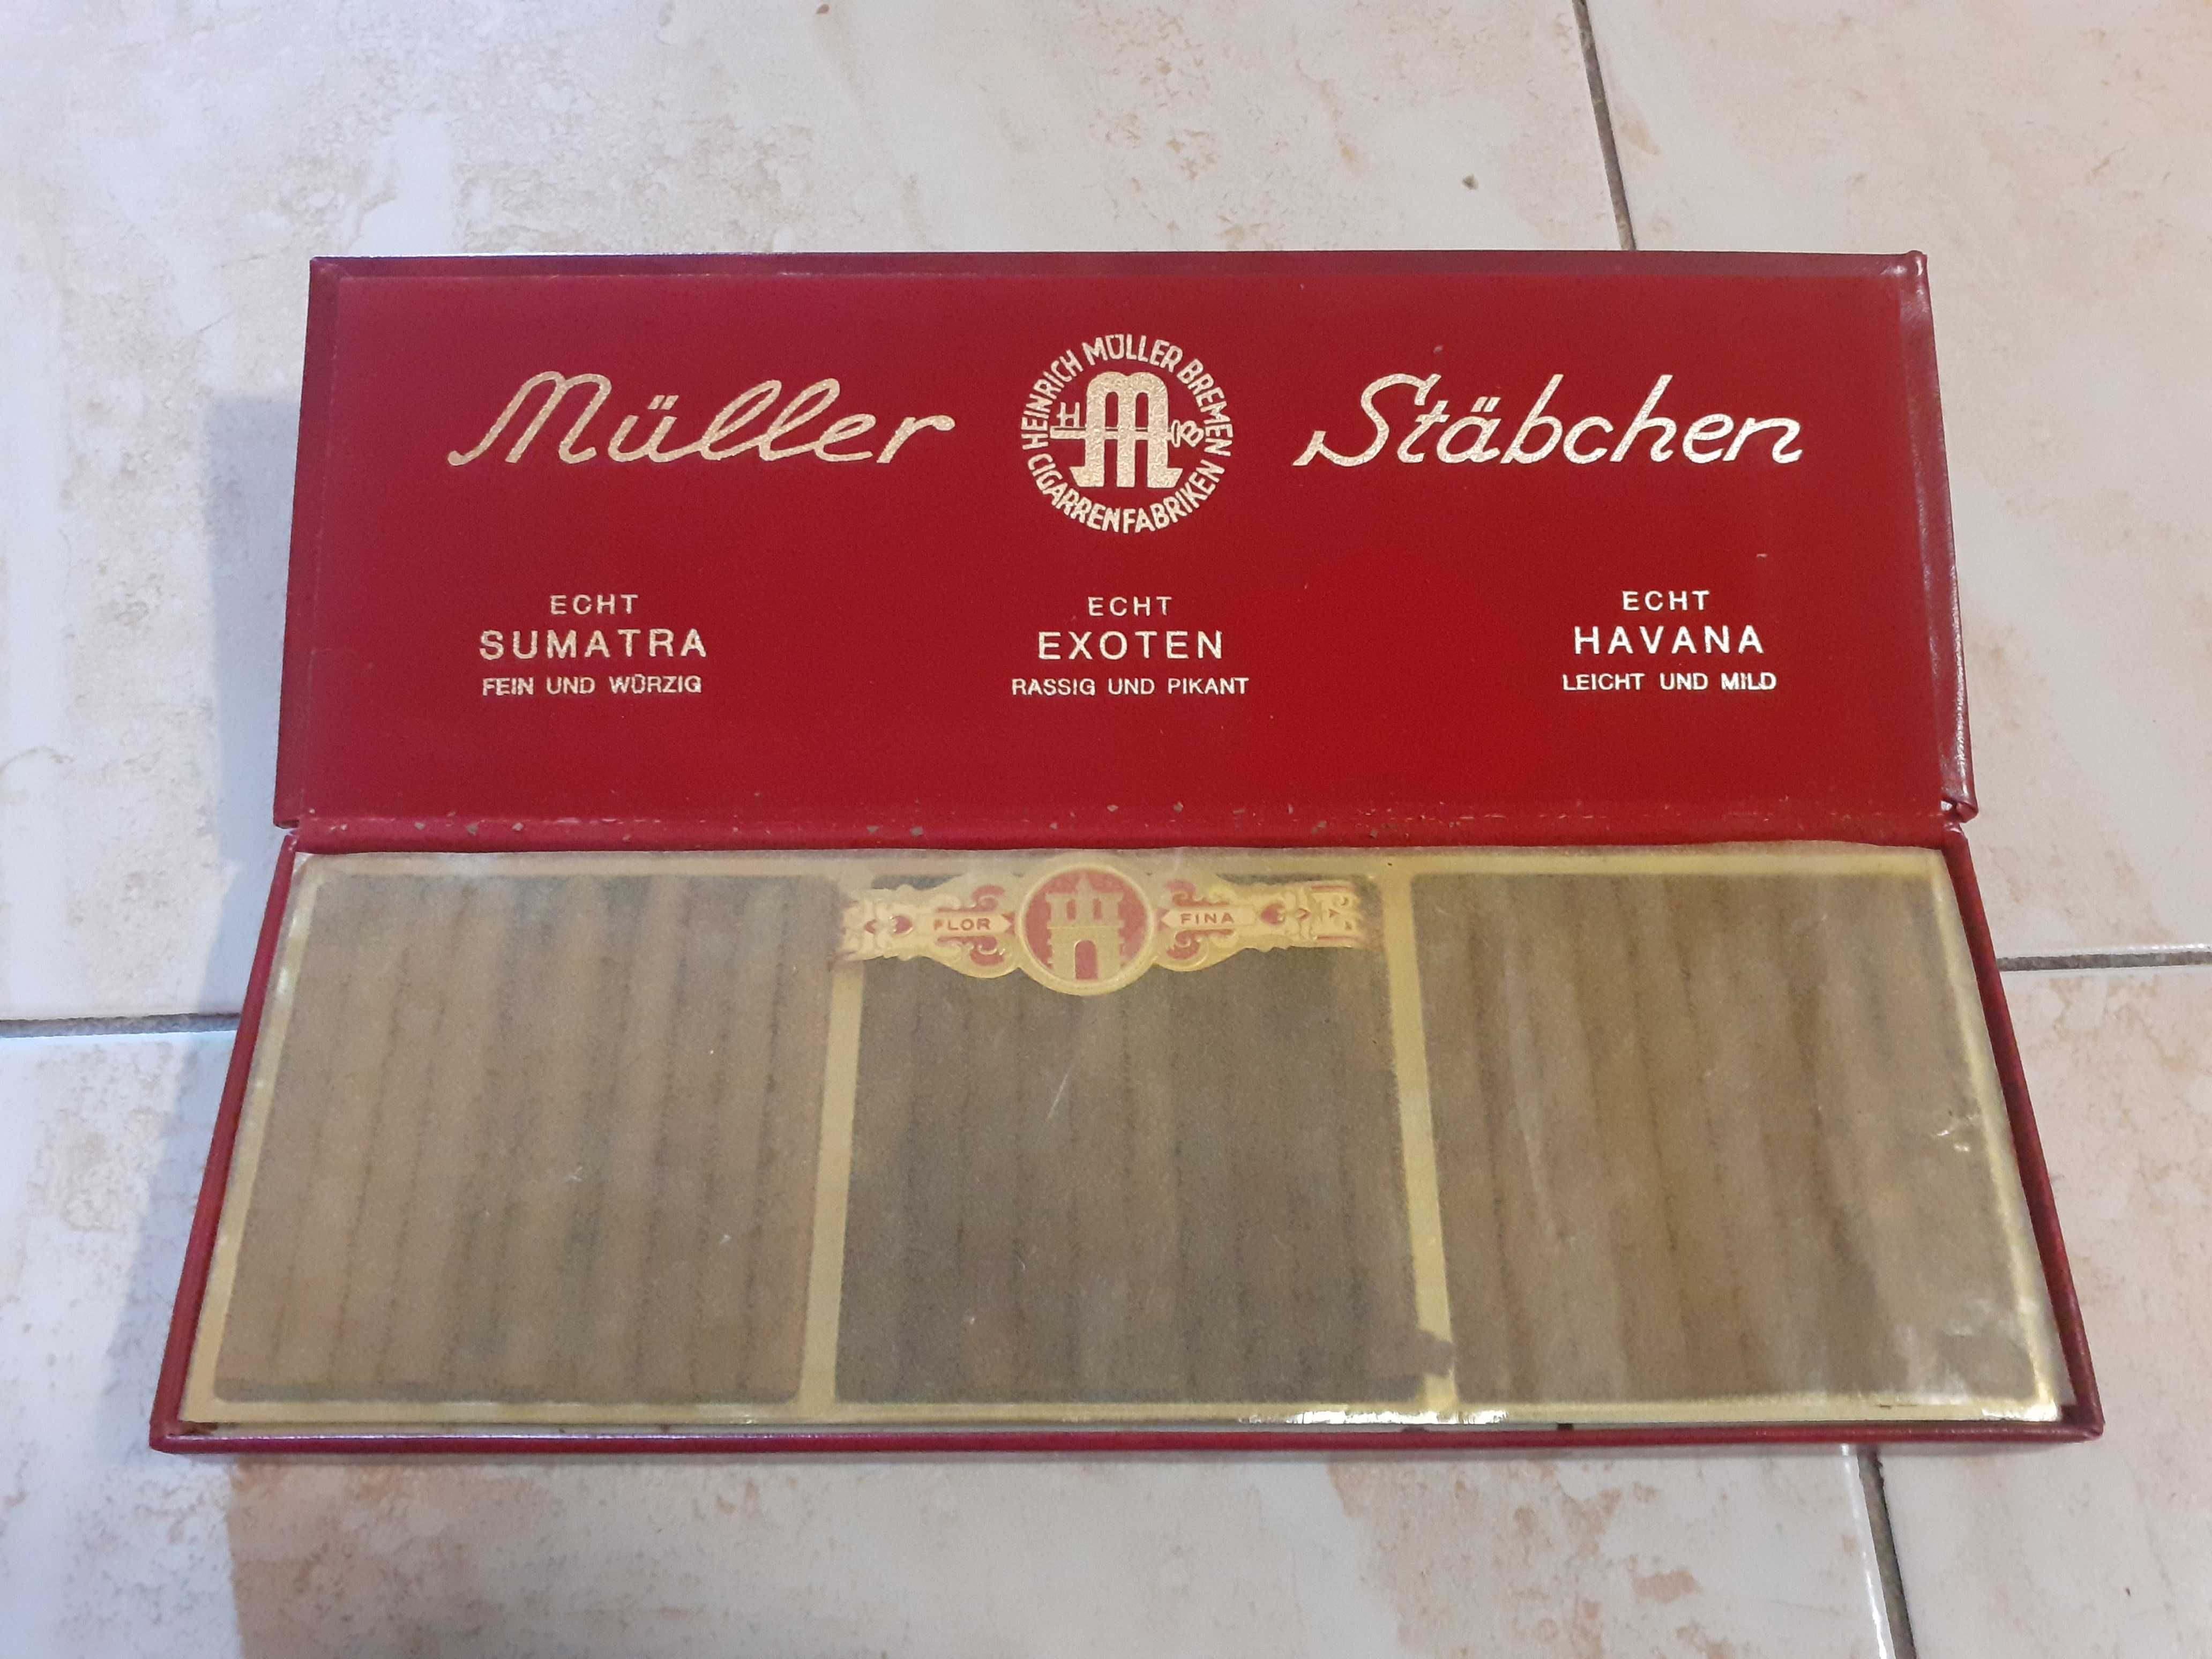 Pudełko z cygaretkami.Muller Stabchen.